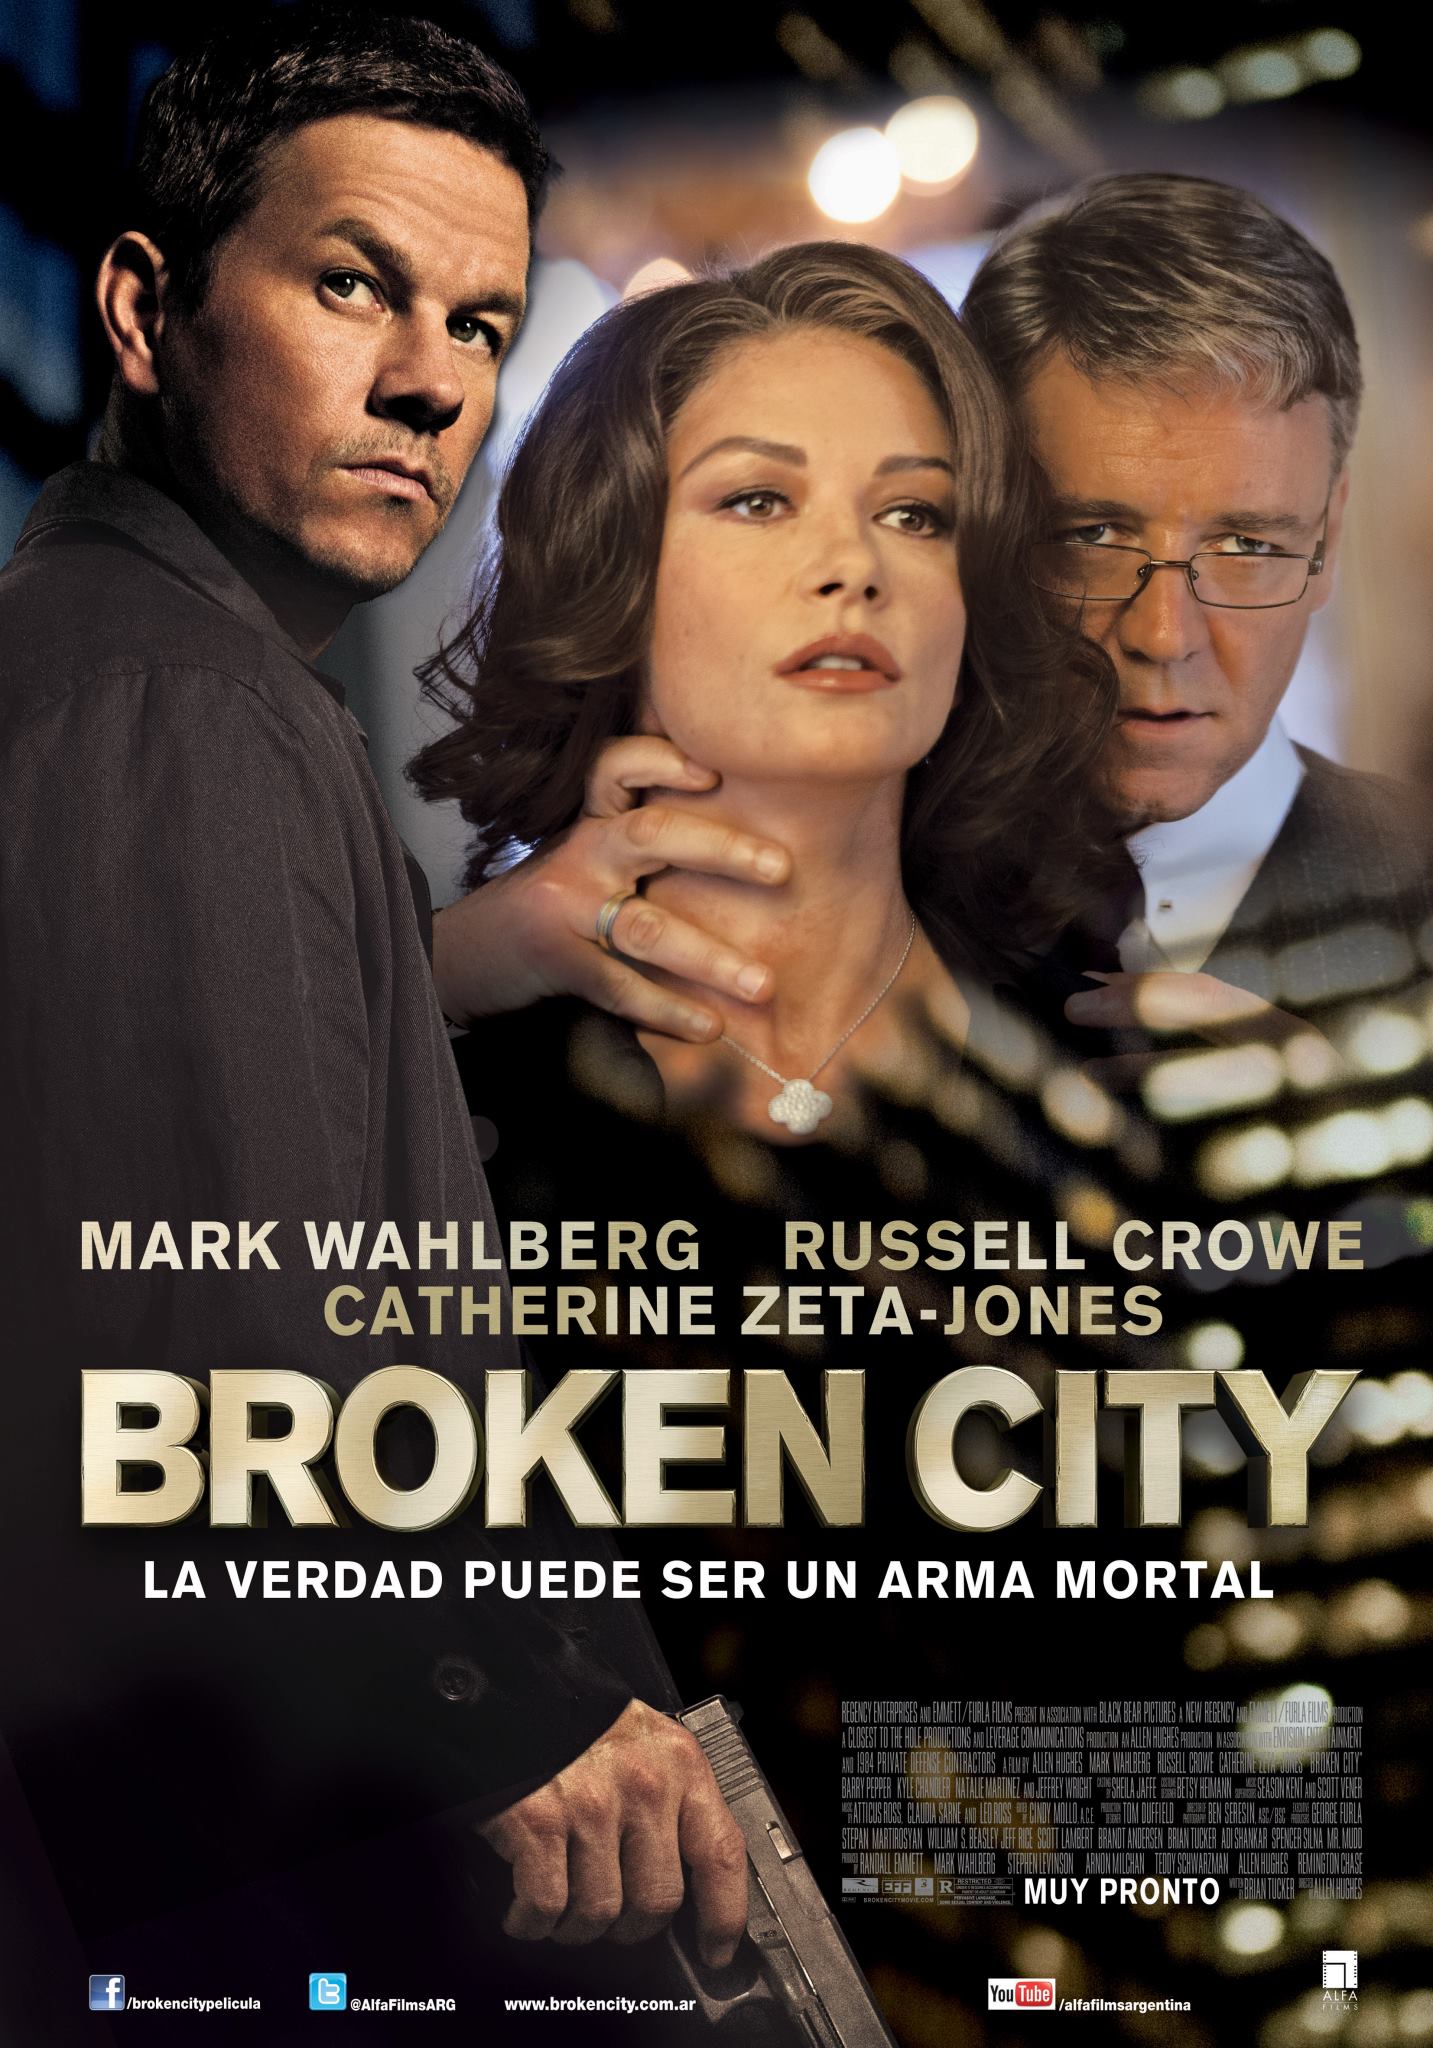 Stiahni si Filmy CZ/SK dabing Zlomene mesto / Broken City (2013)(1080p)(BluRay)(EN/CZ)  = CSFD 61%